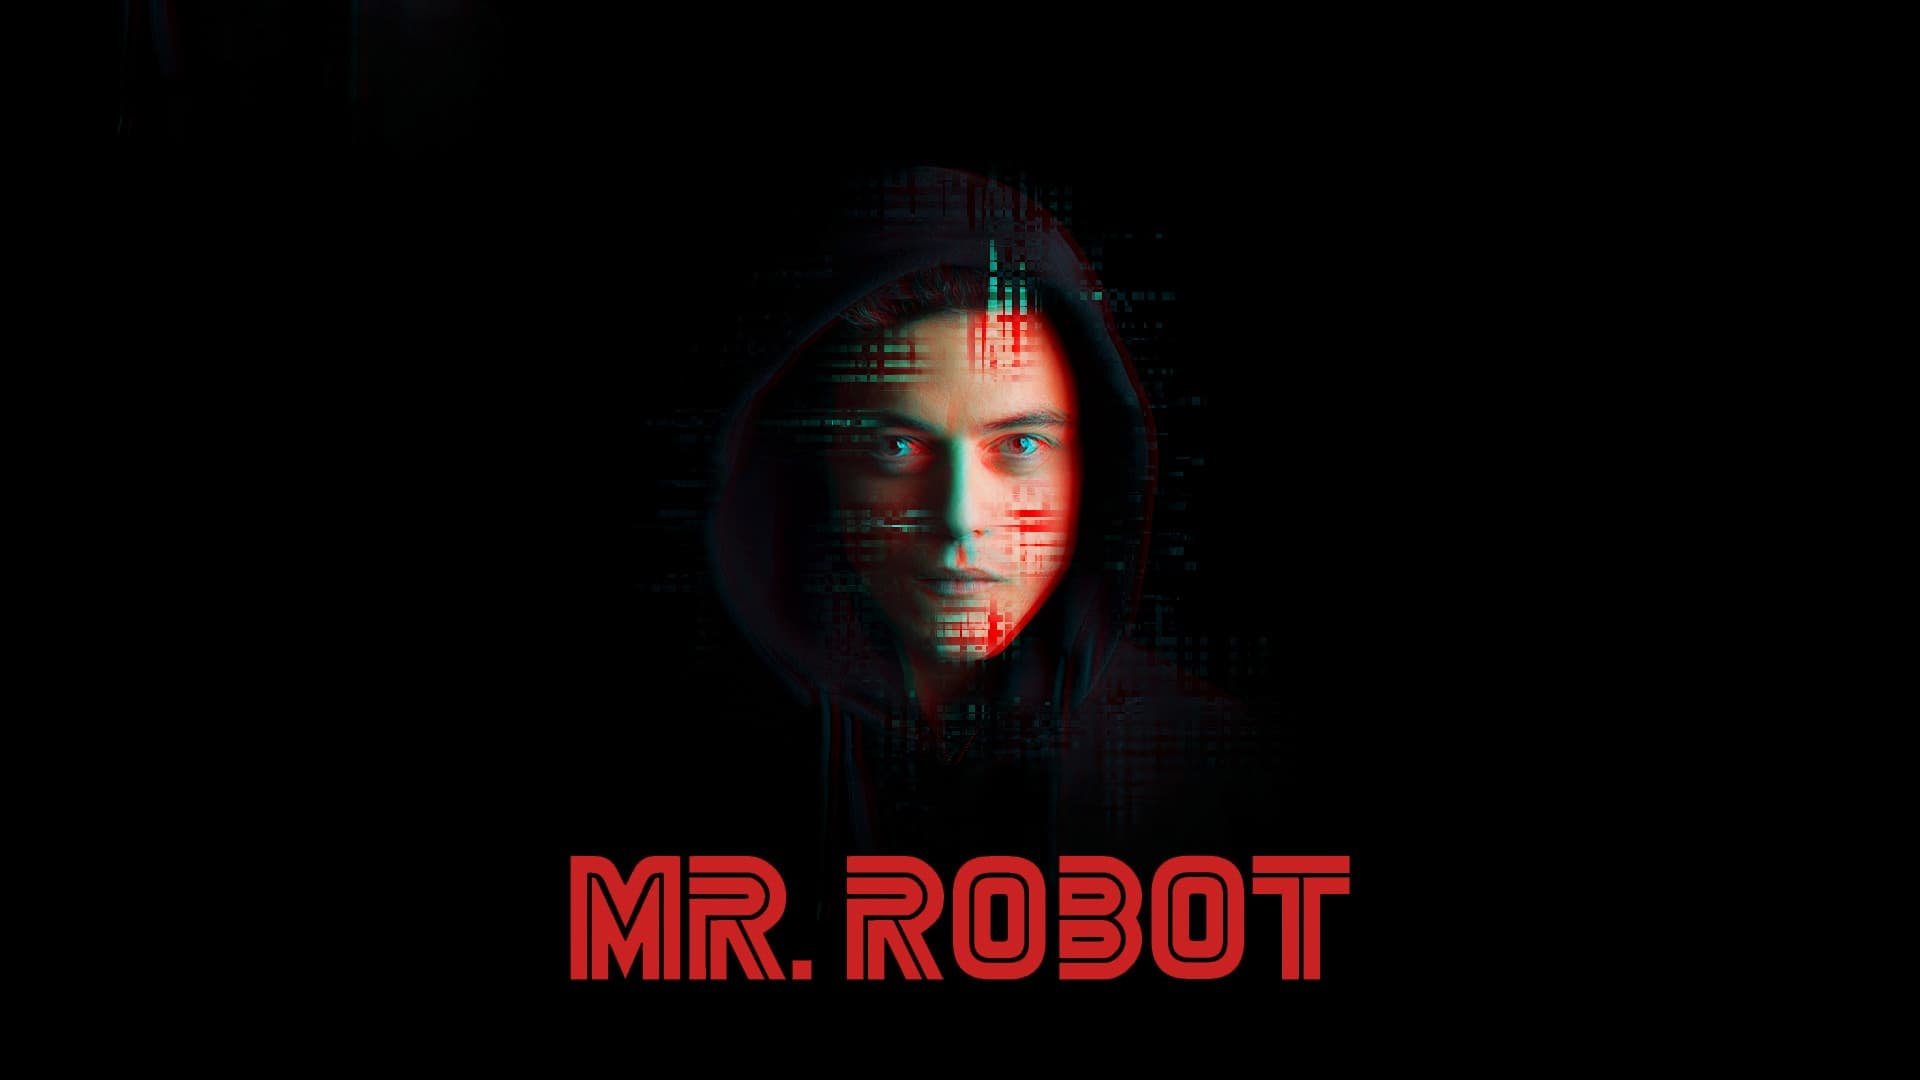 Mr. Robot / Mister Robot / Janob Robot Barcha qismlar Uzbek tilida